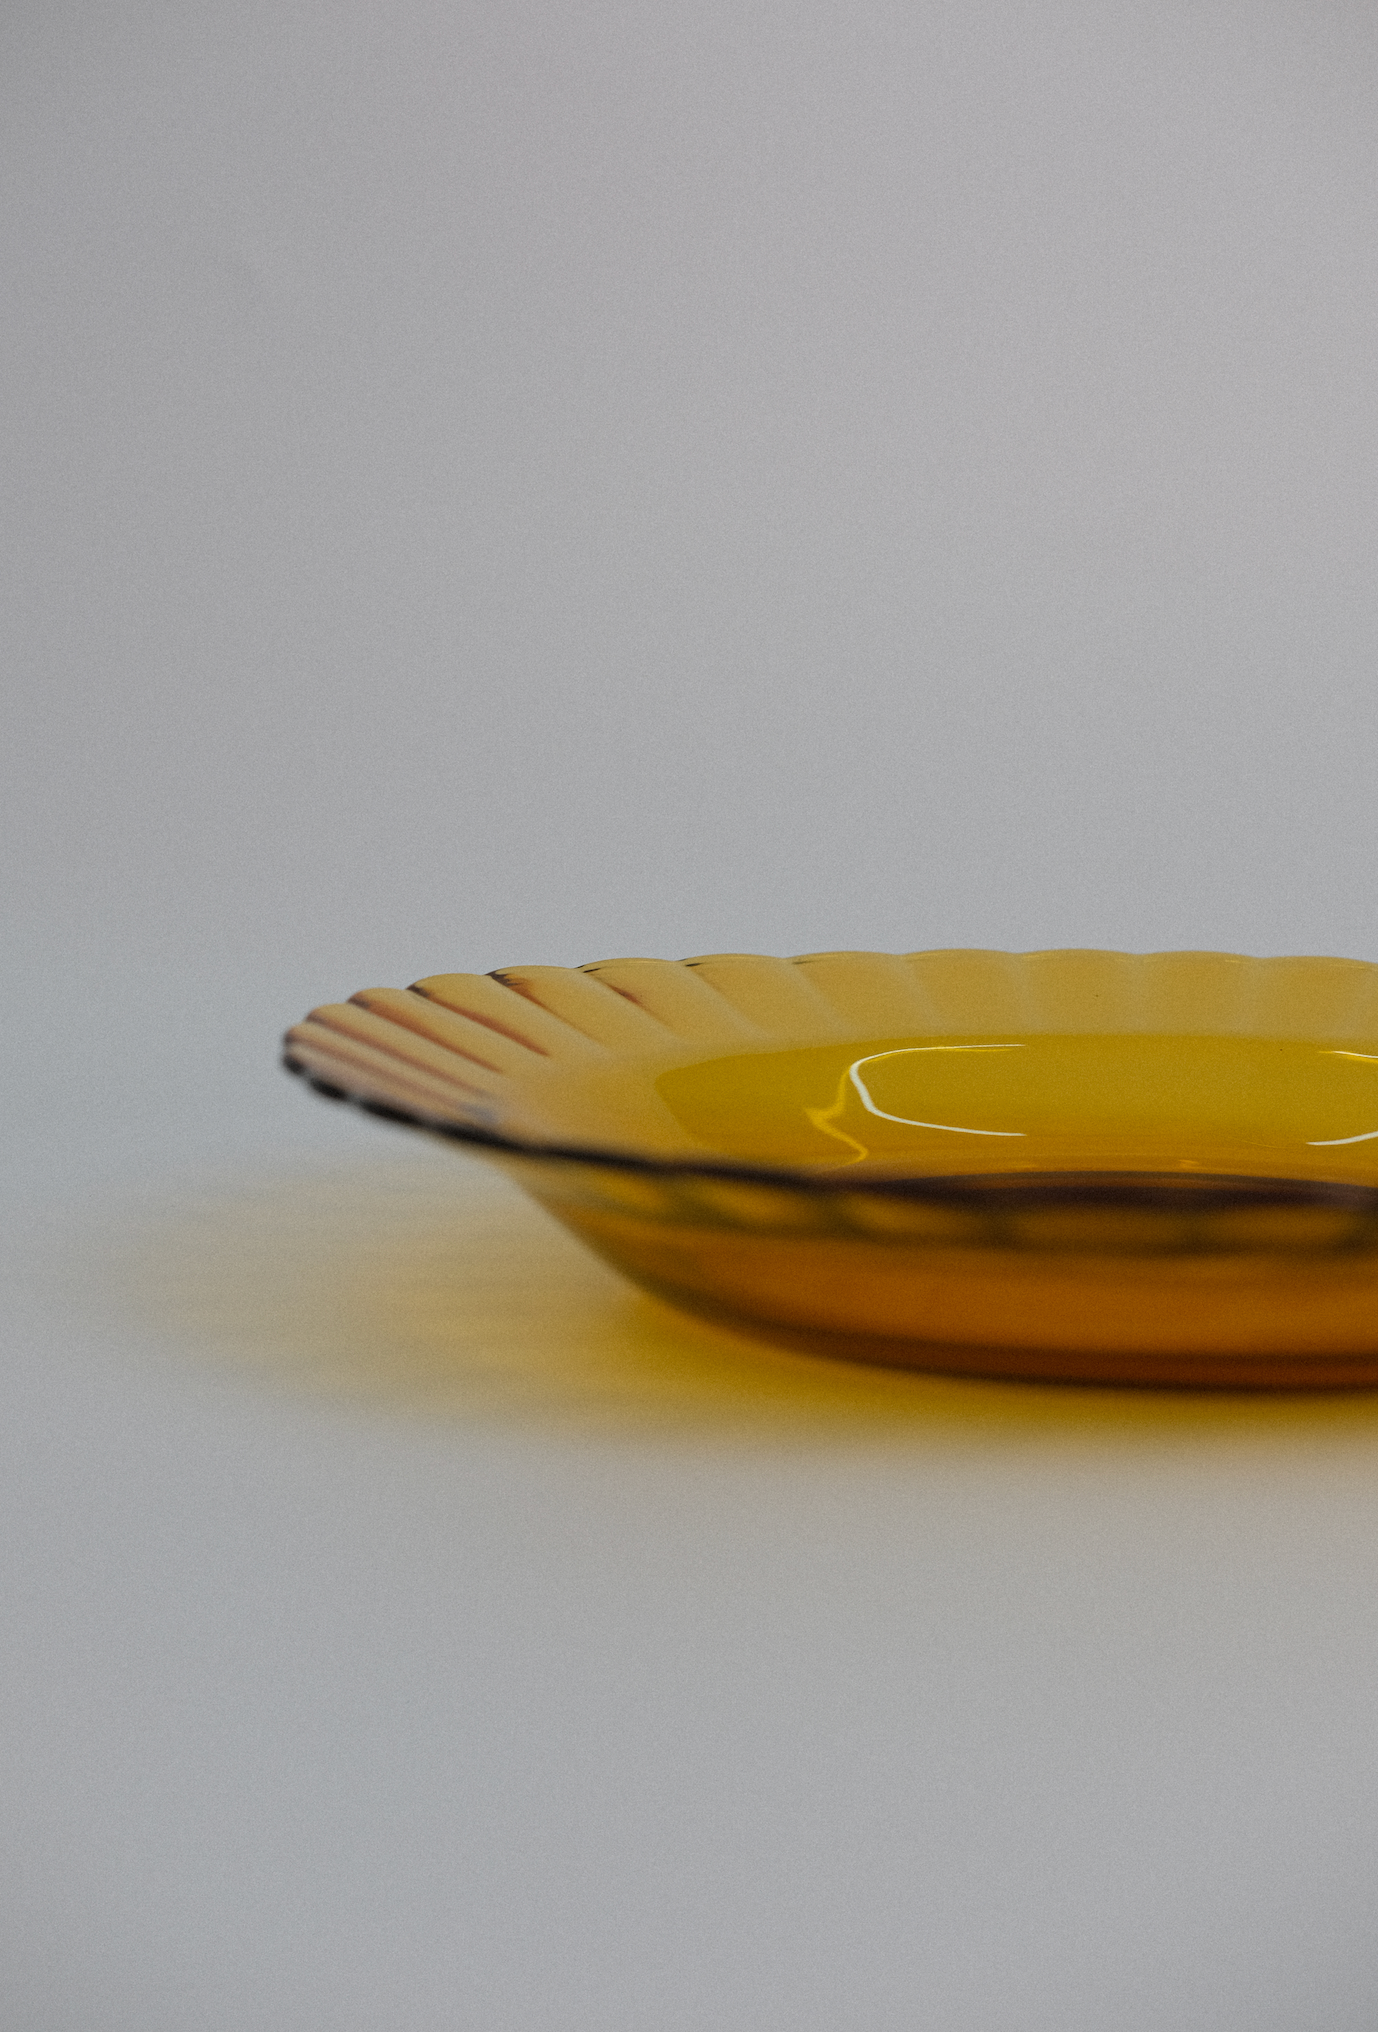 法國製 Duralex 琥珀湯盤 | Made in France Duralex Amber Calotte Soup Plate (23cm)